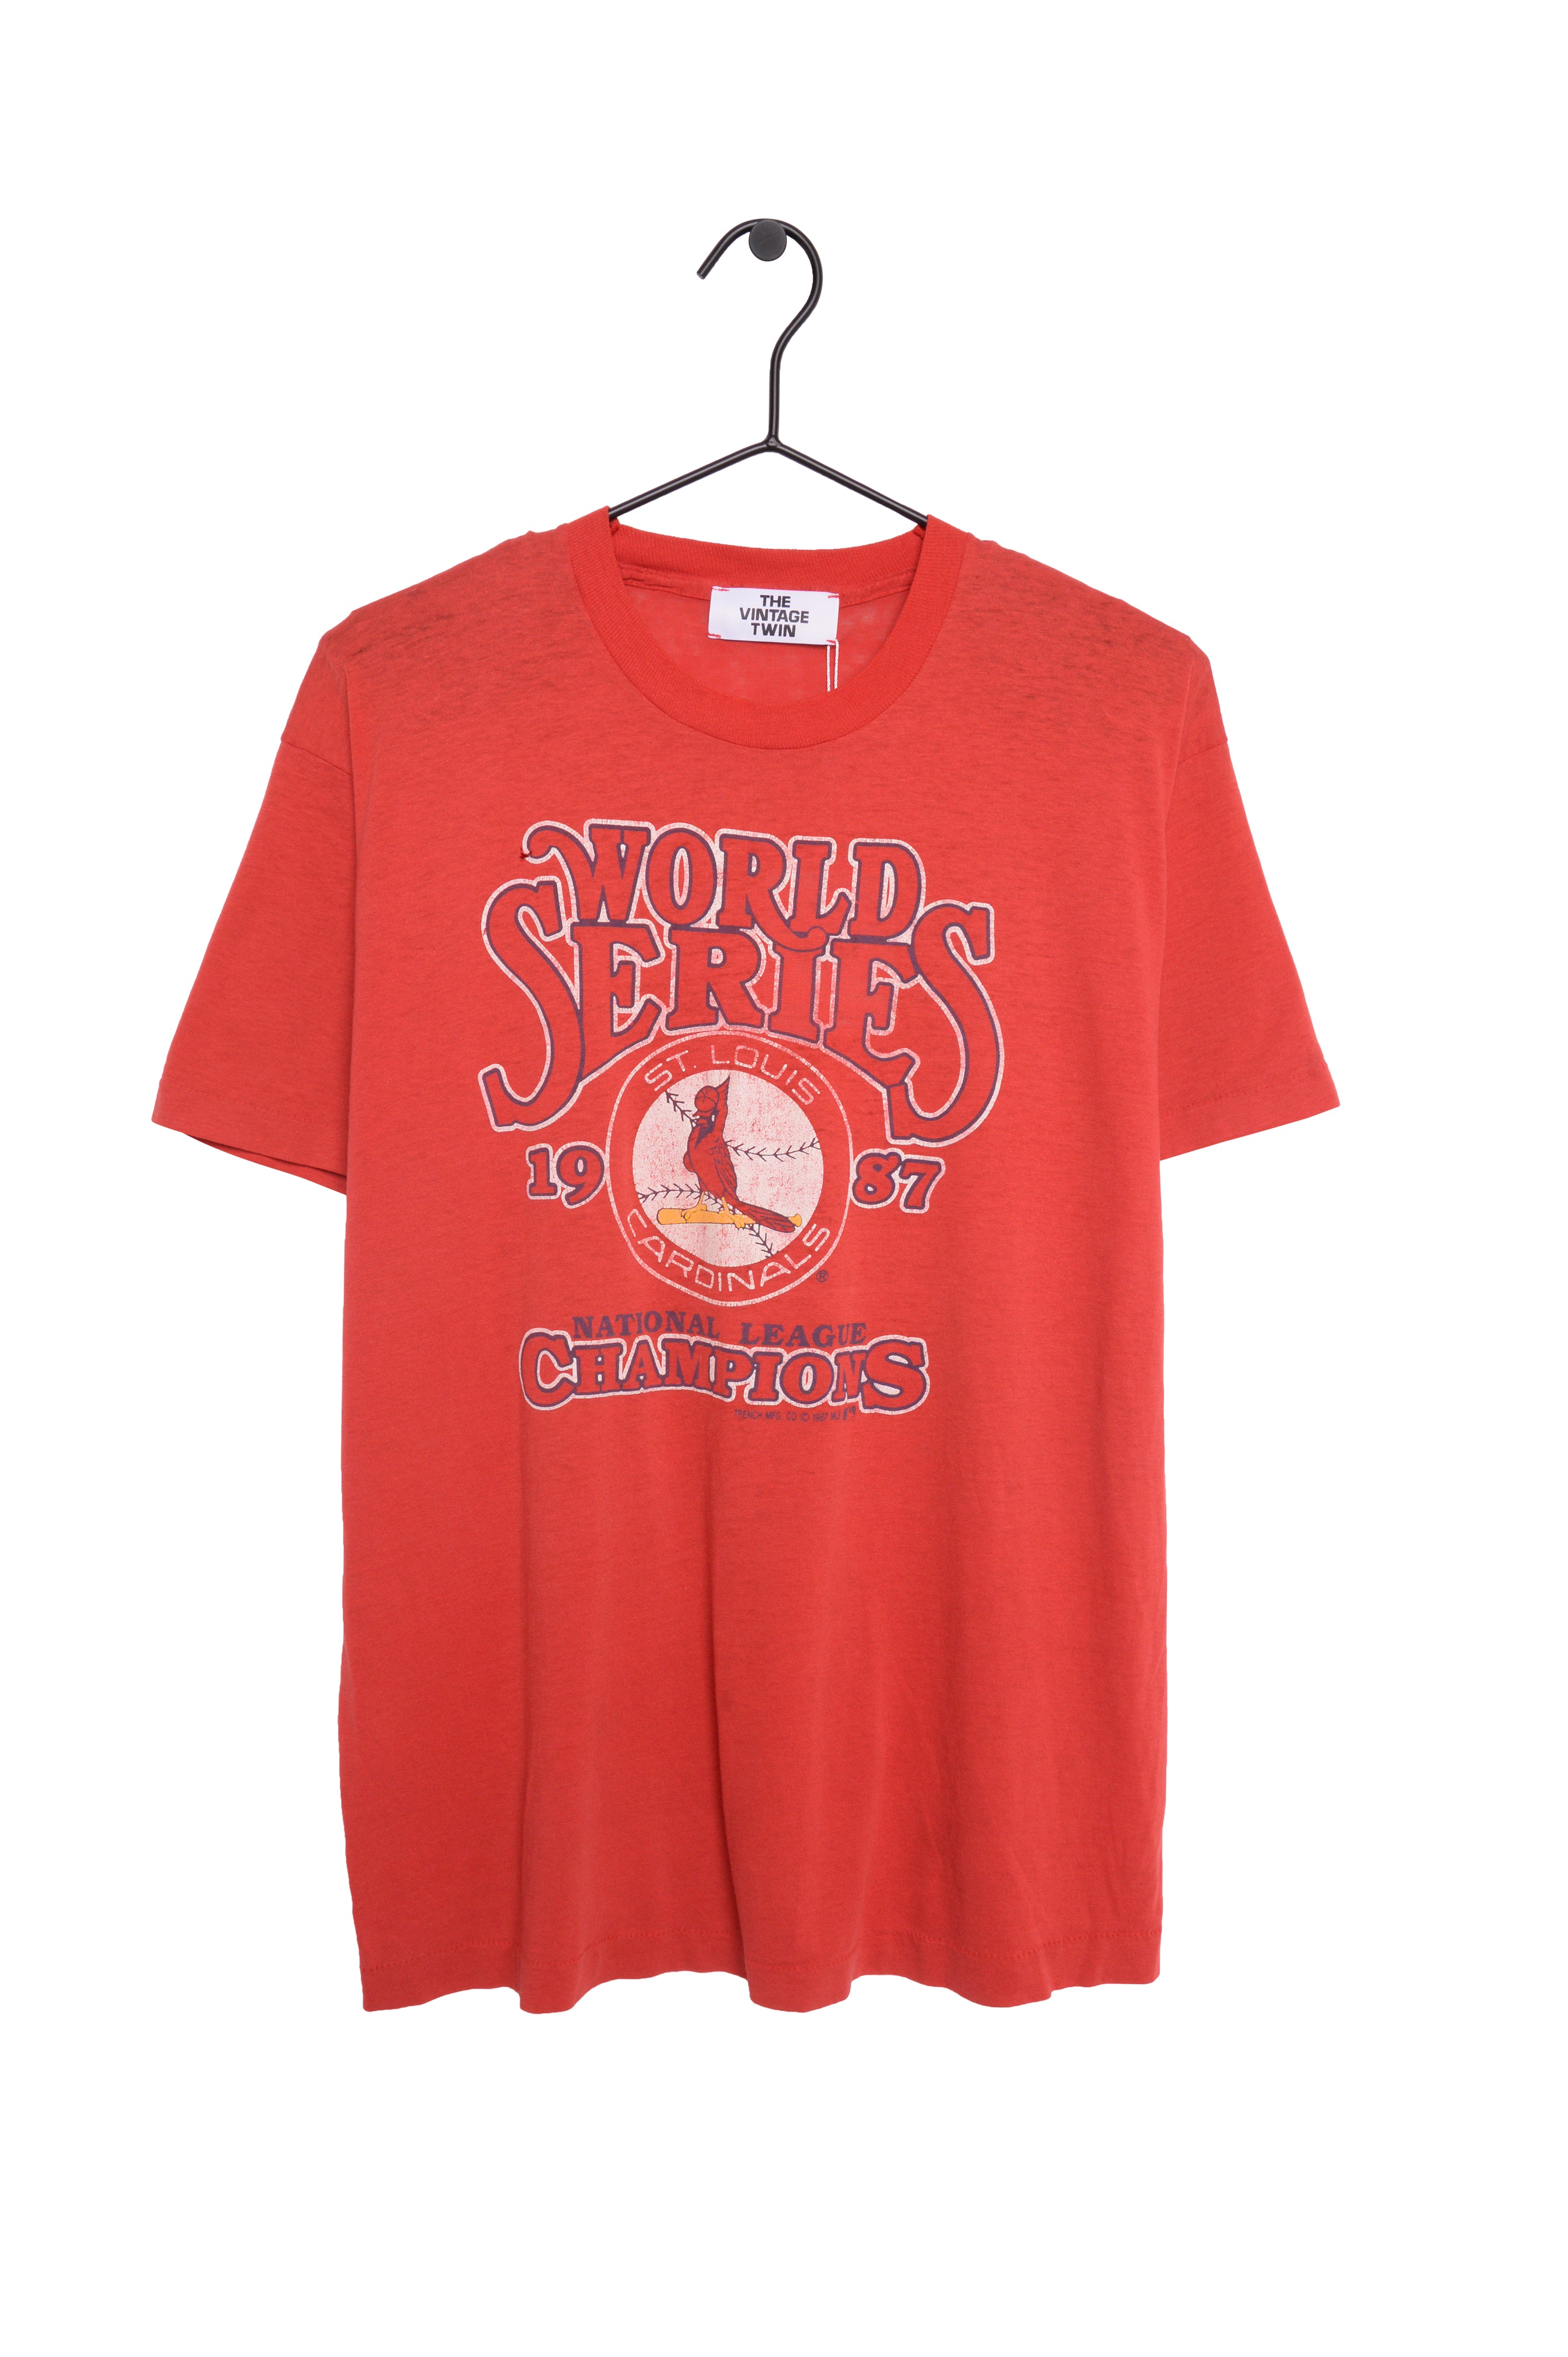 Vintage St Louis Cardinals T Shirt 1980s Red Champion 